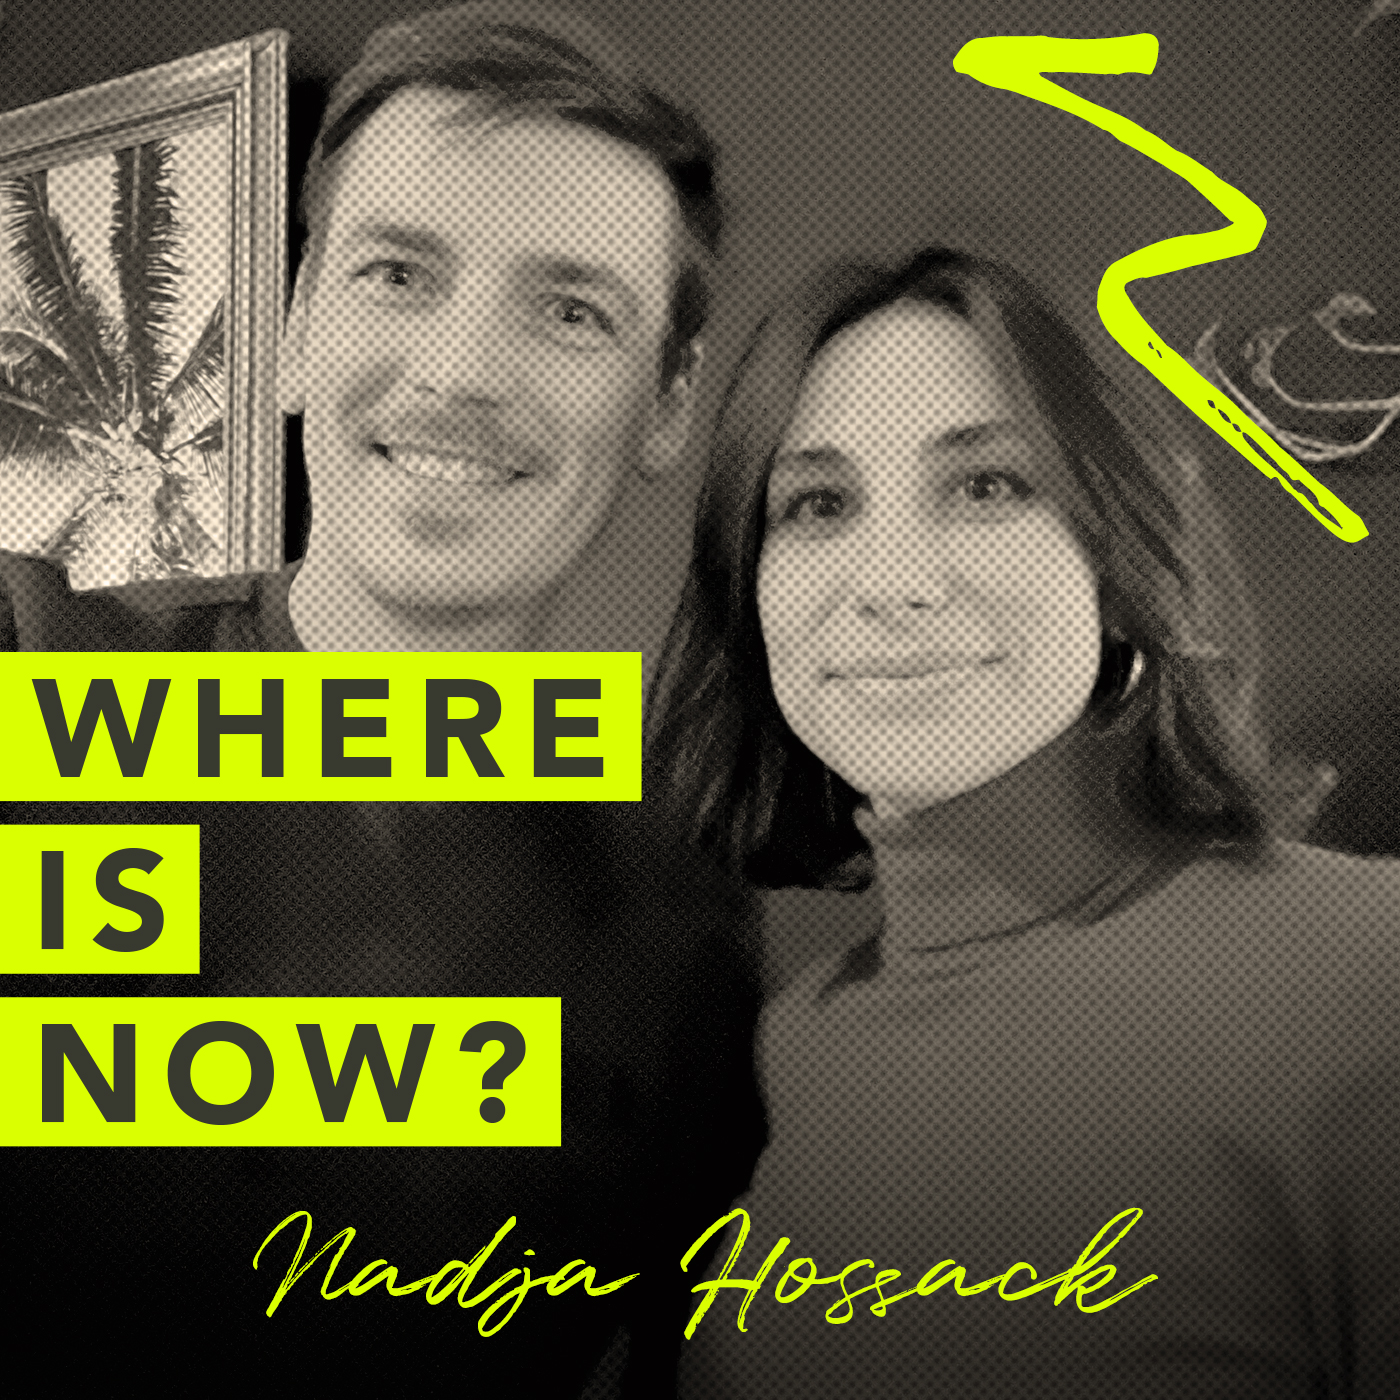 Where is now? Interview - Stefanie Stahl